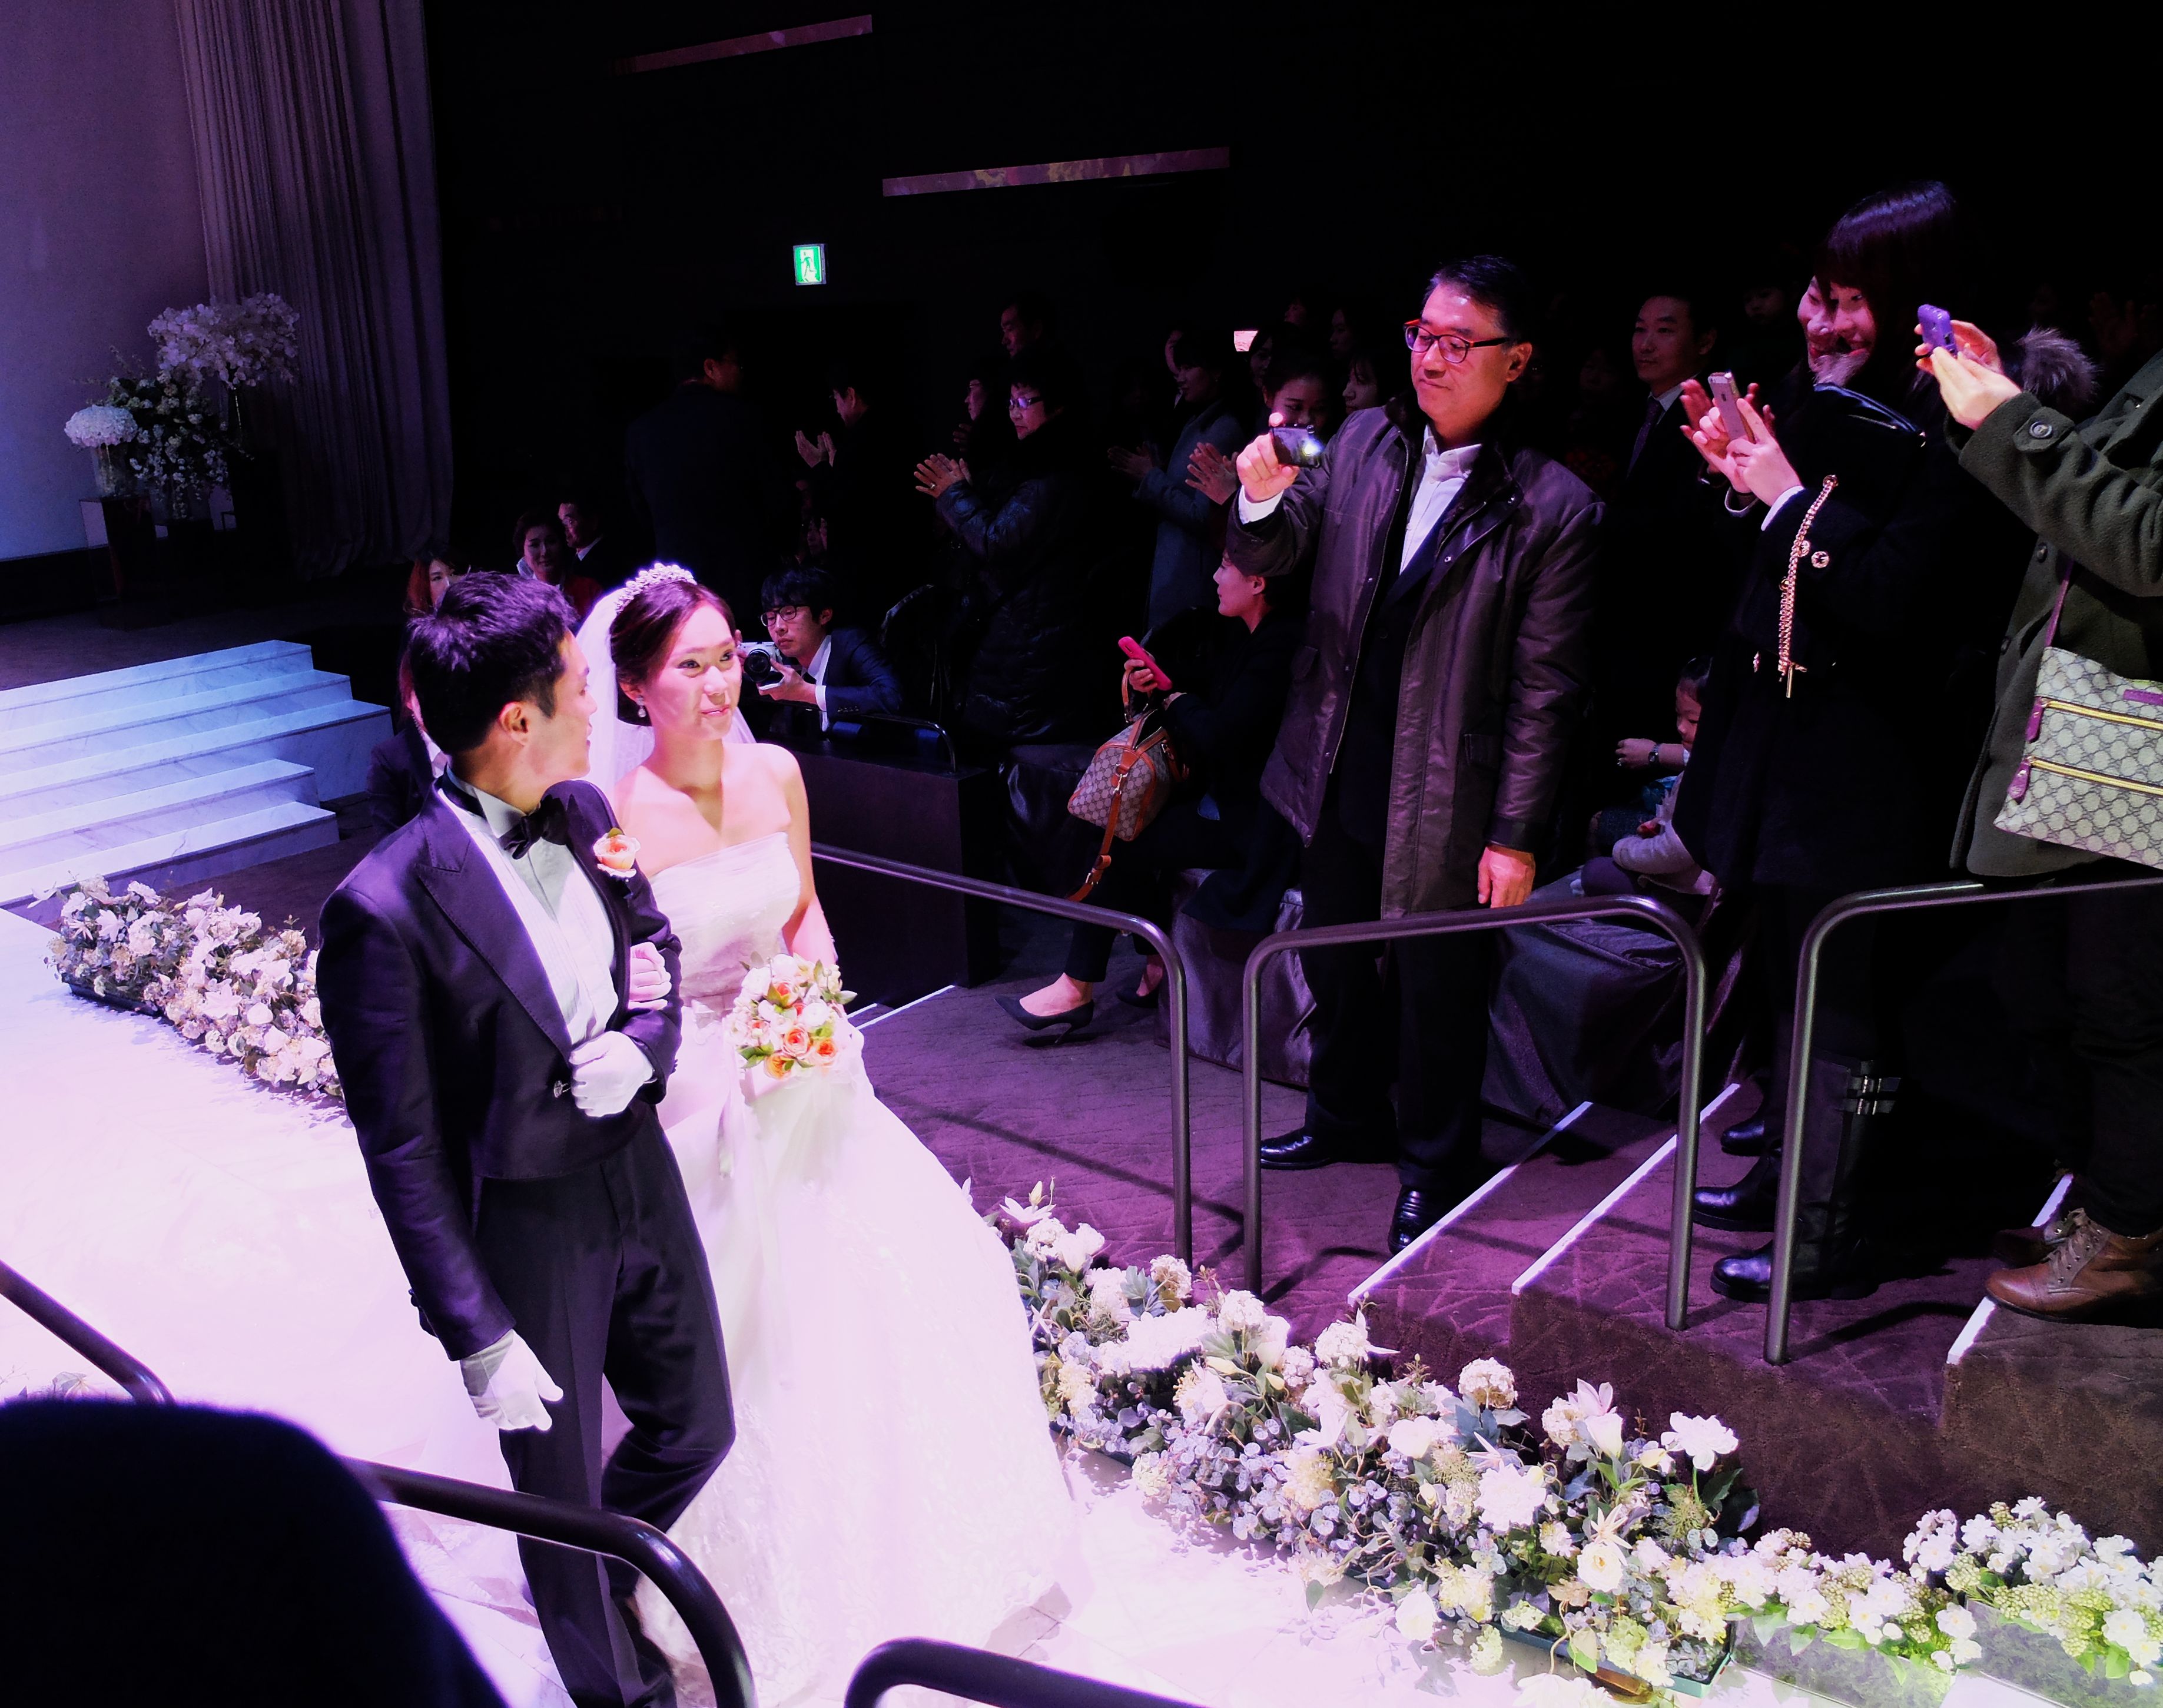 https://hillaryhodgskiss.files.wordpress.com/2014/12/2014-12-20-masan-jeongs-wedding-61.jpg